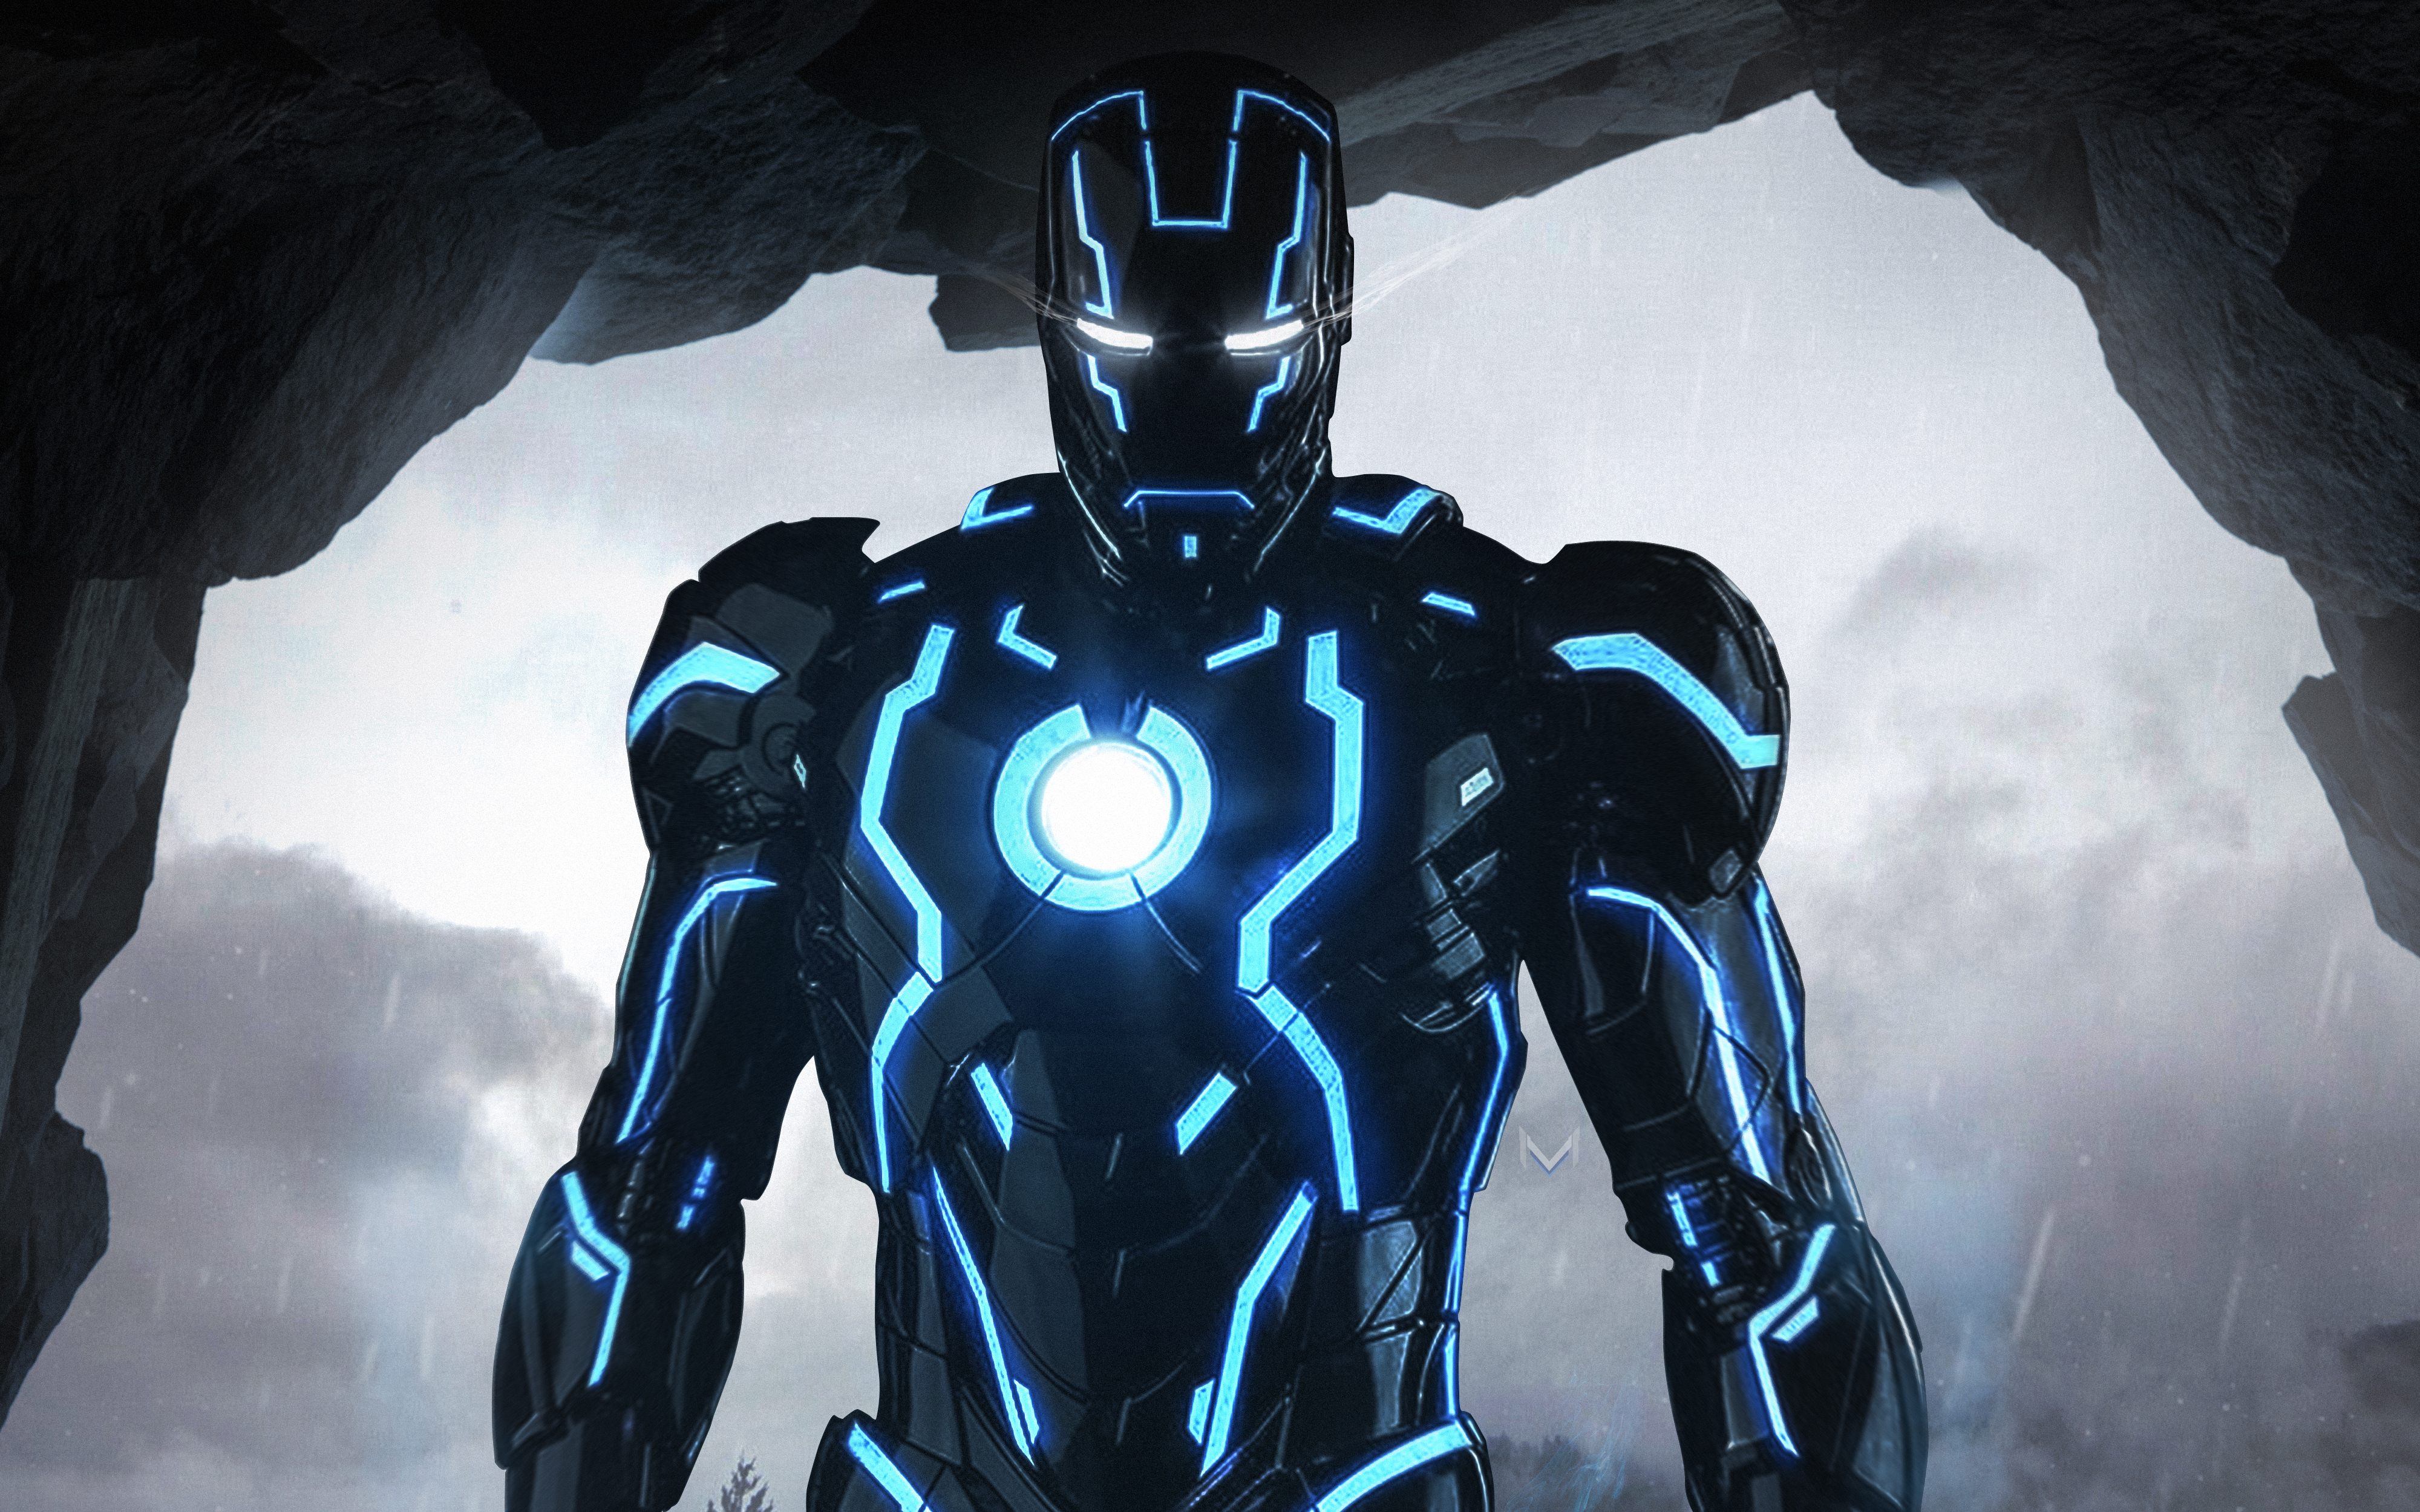 Free Download Iron Man Black Hd Wallpaper Iron Man Neon Suit Hd Wallpapers 4000x2500 For Your Desktop Mobile Tablet Explore 42 4k Iron Man Wallpapers 4k Iron Man Wallpapers